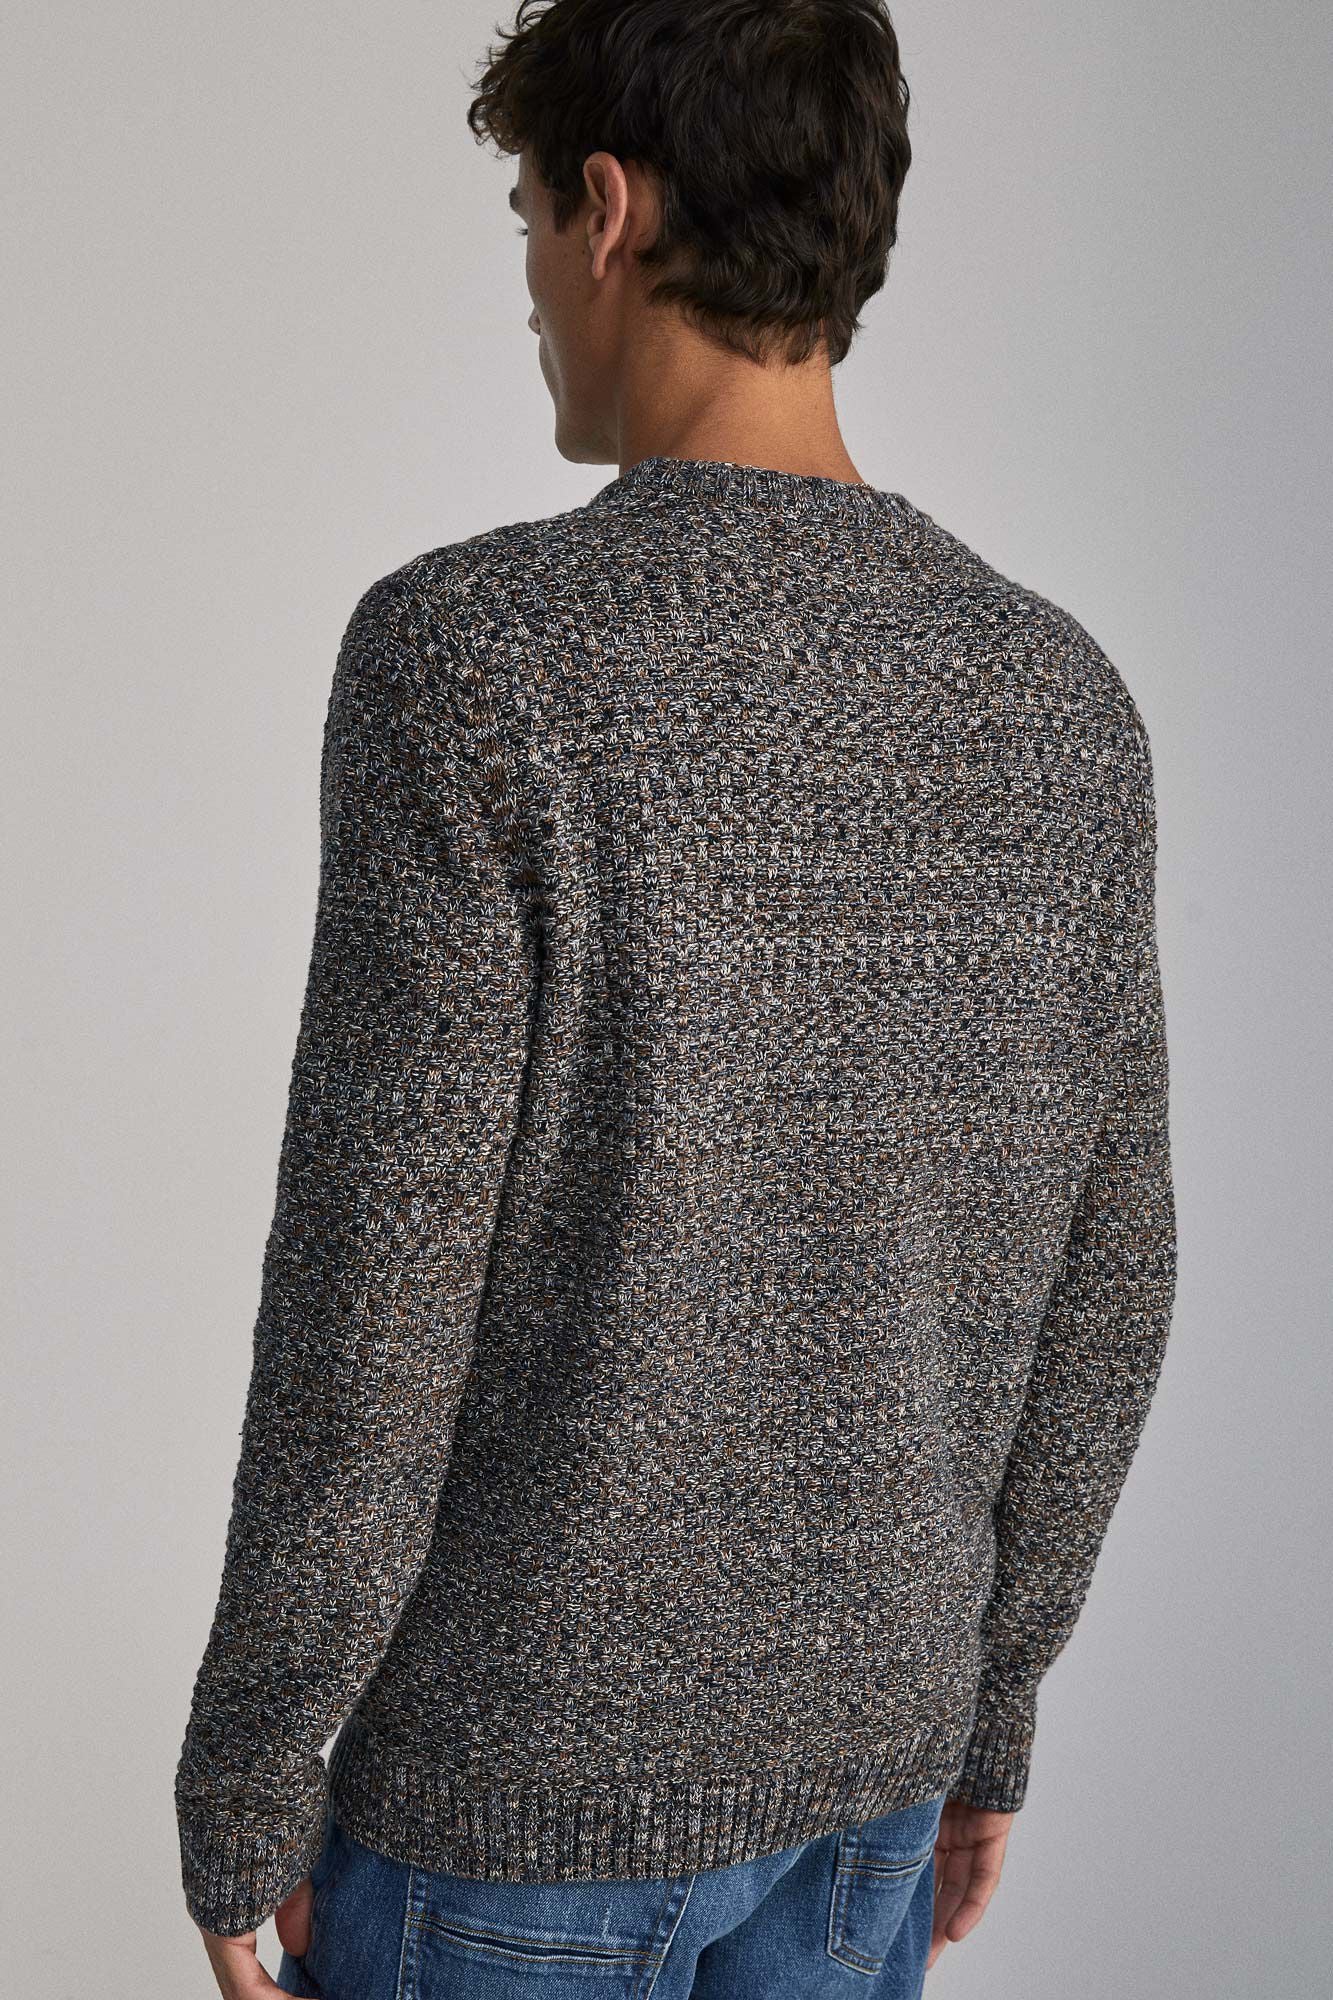 Textured fancy knit jumper